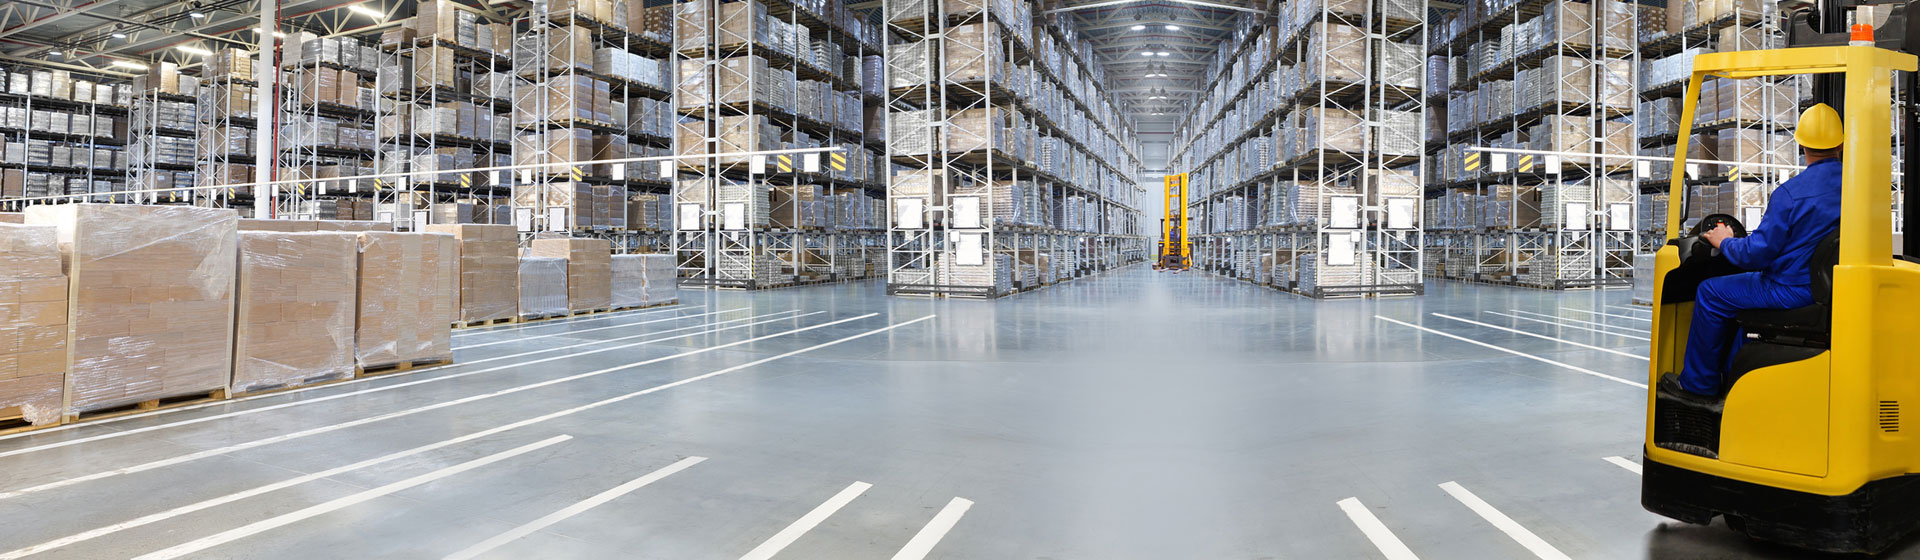 Optimum use of warehouse space